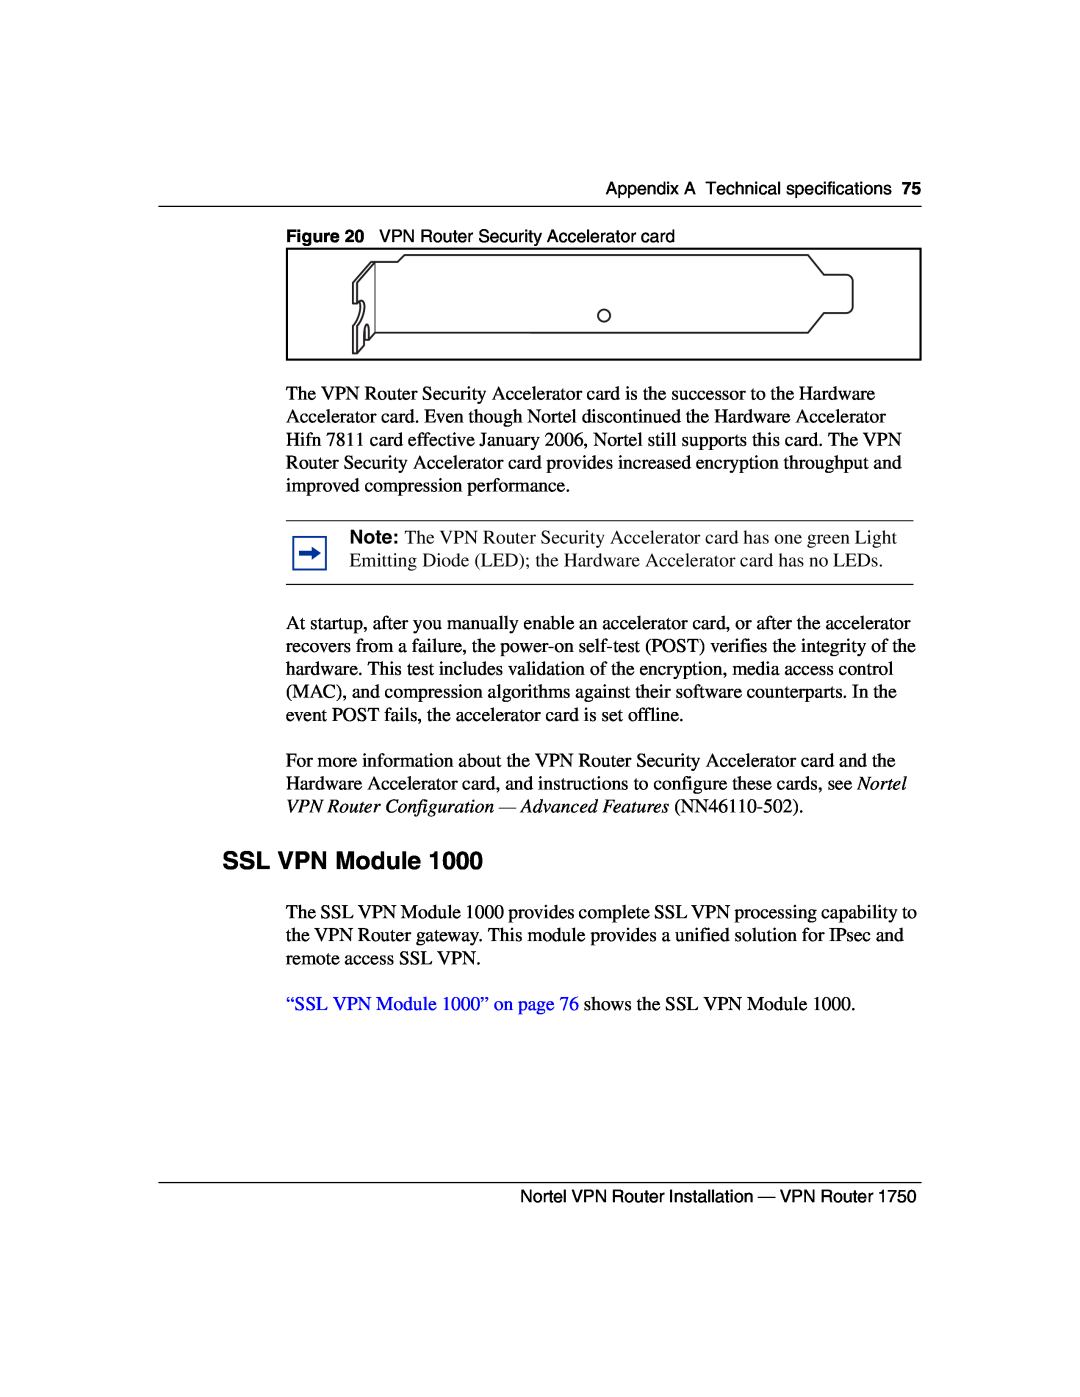 Nortel Networks 1750 manual “SSL VPN Module 1000” on page 76 shows the SSL VPN Module 